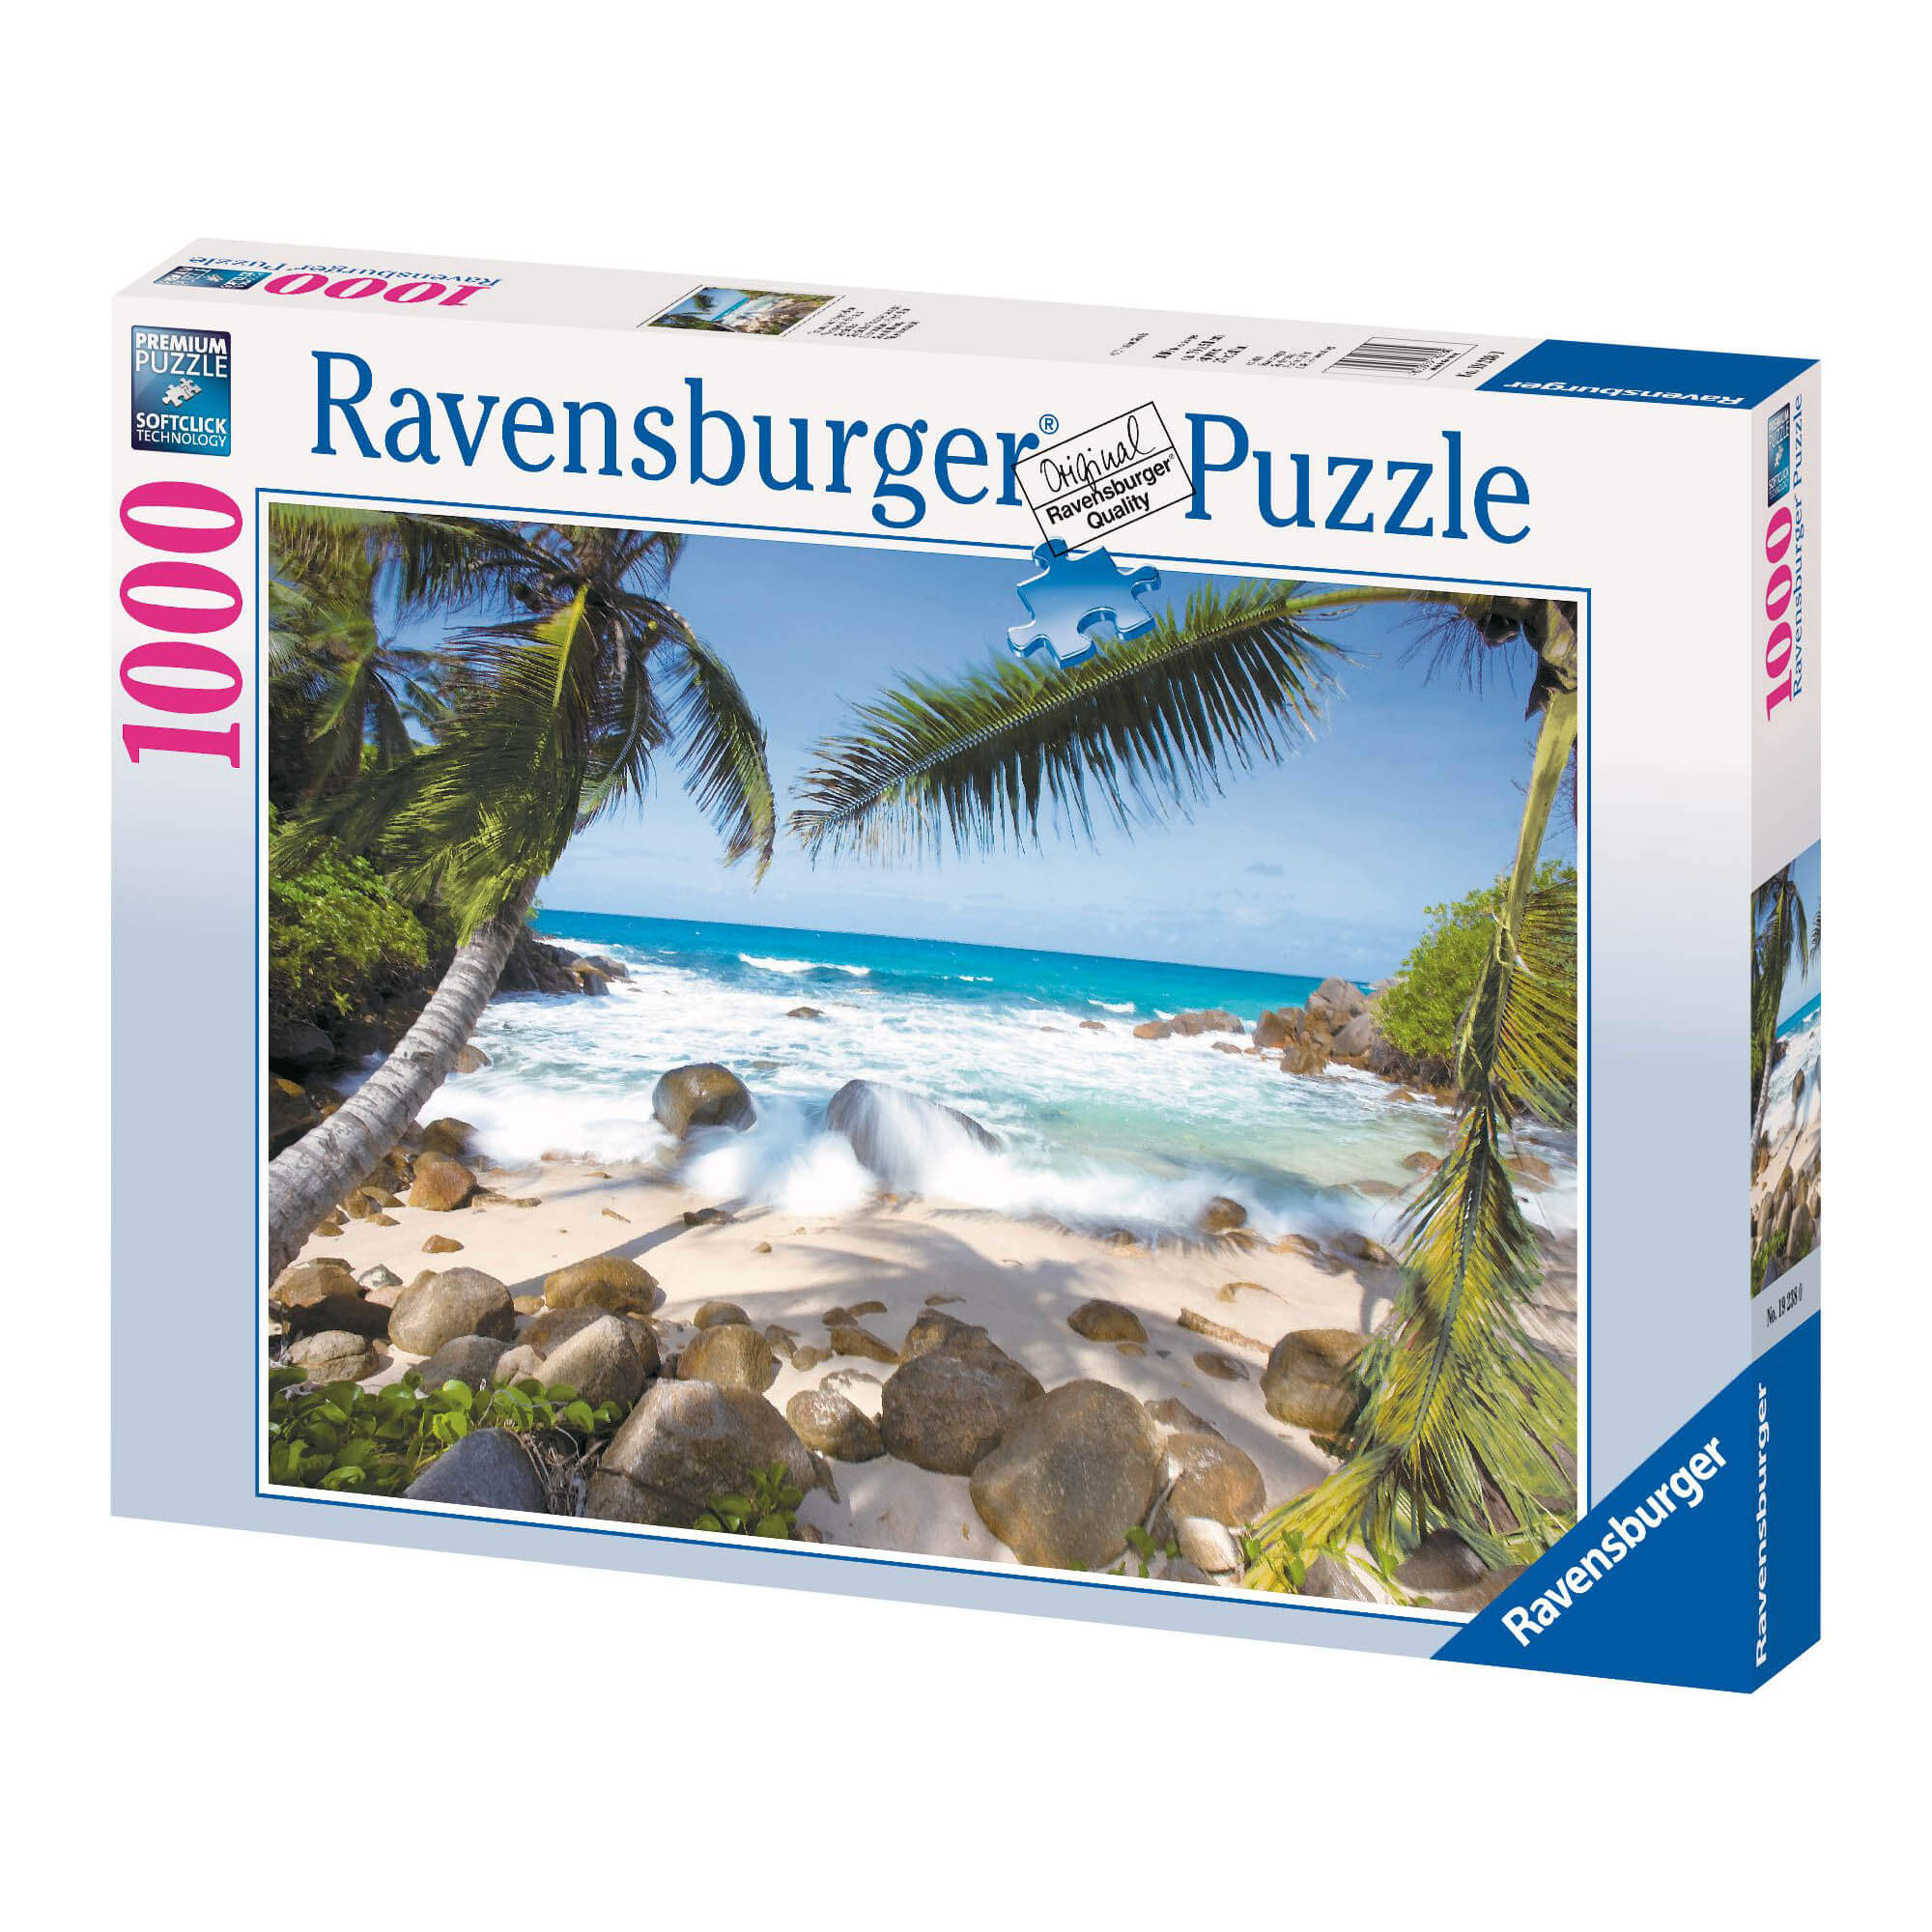 Ravensburger Seaside Beauty 1000 Piece Jigsaw Puzzle